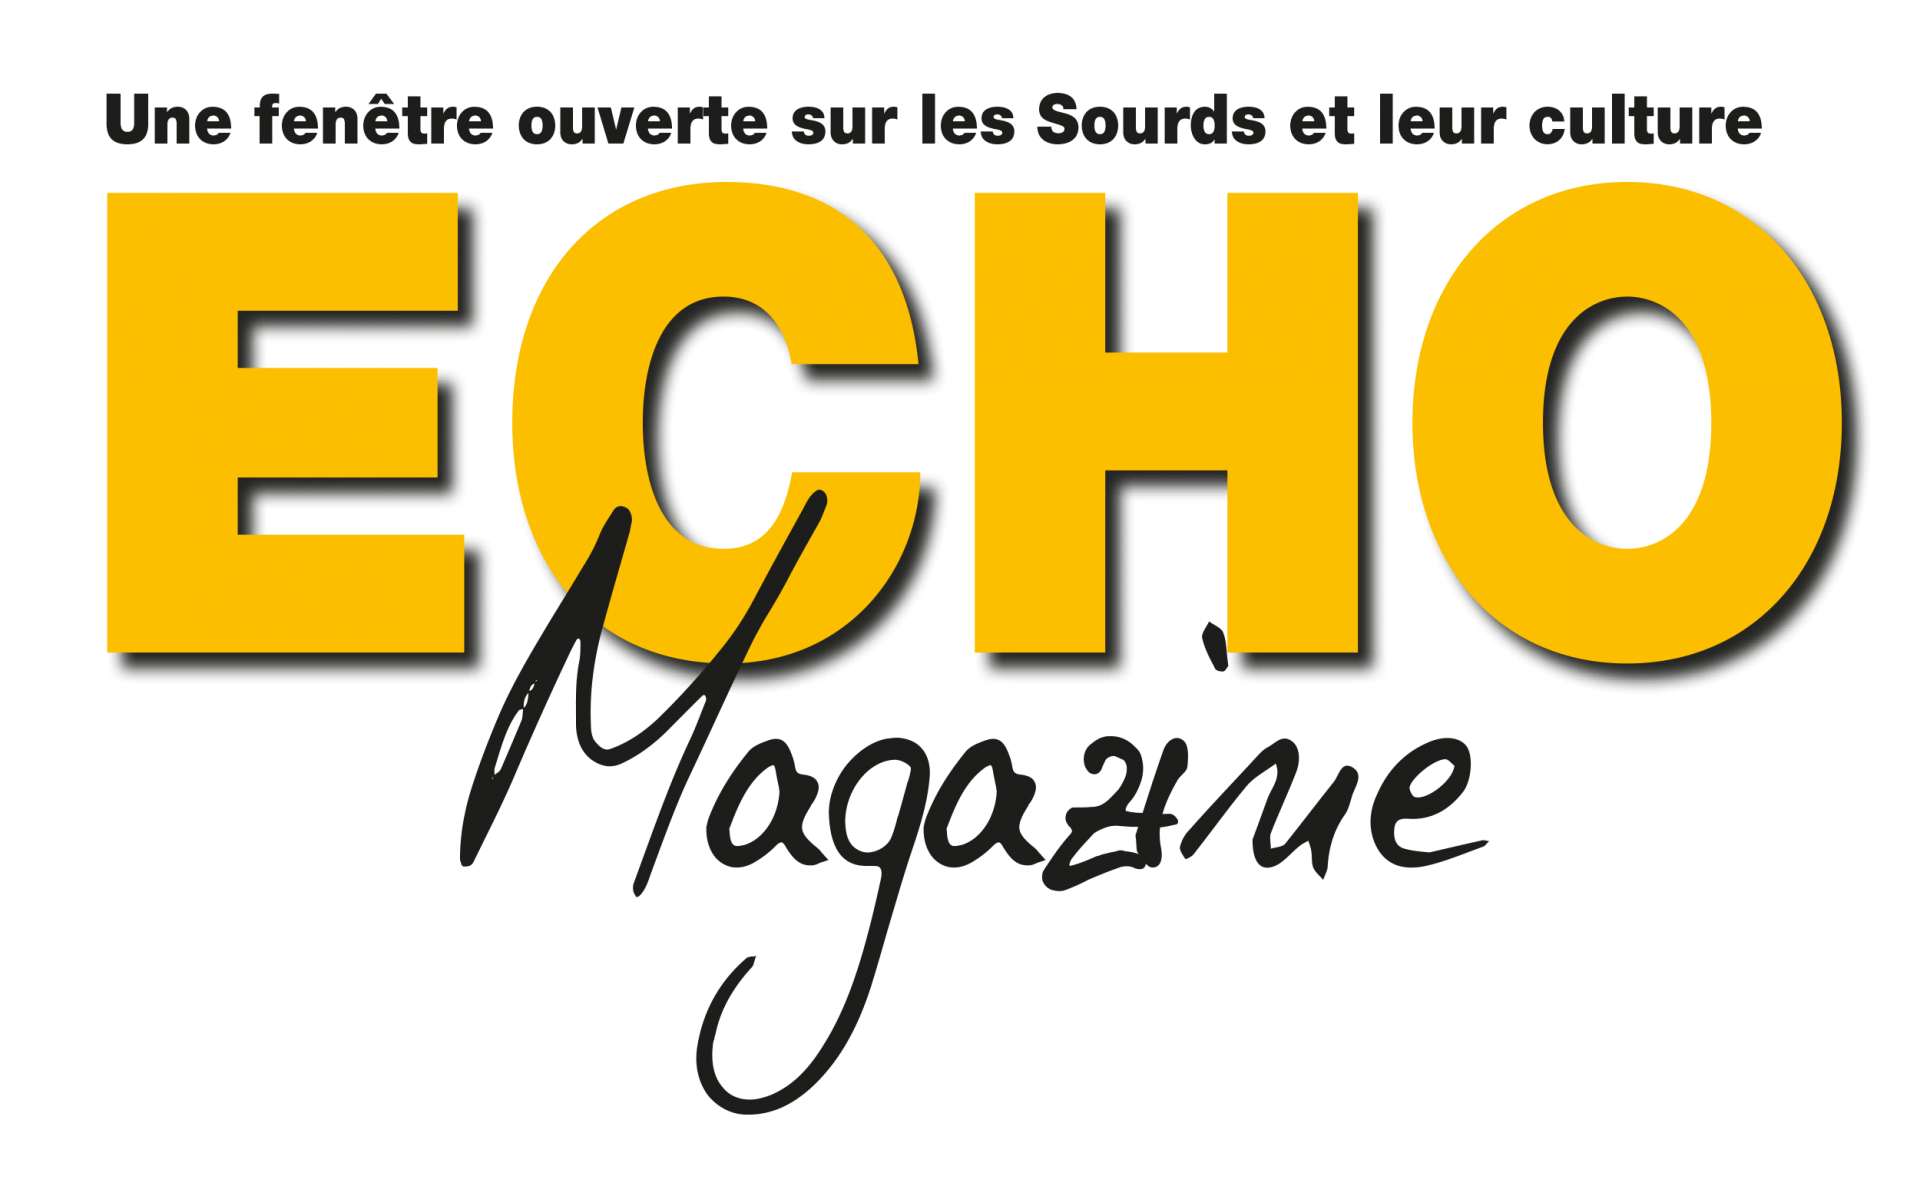 echo magazine